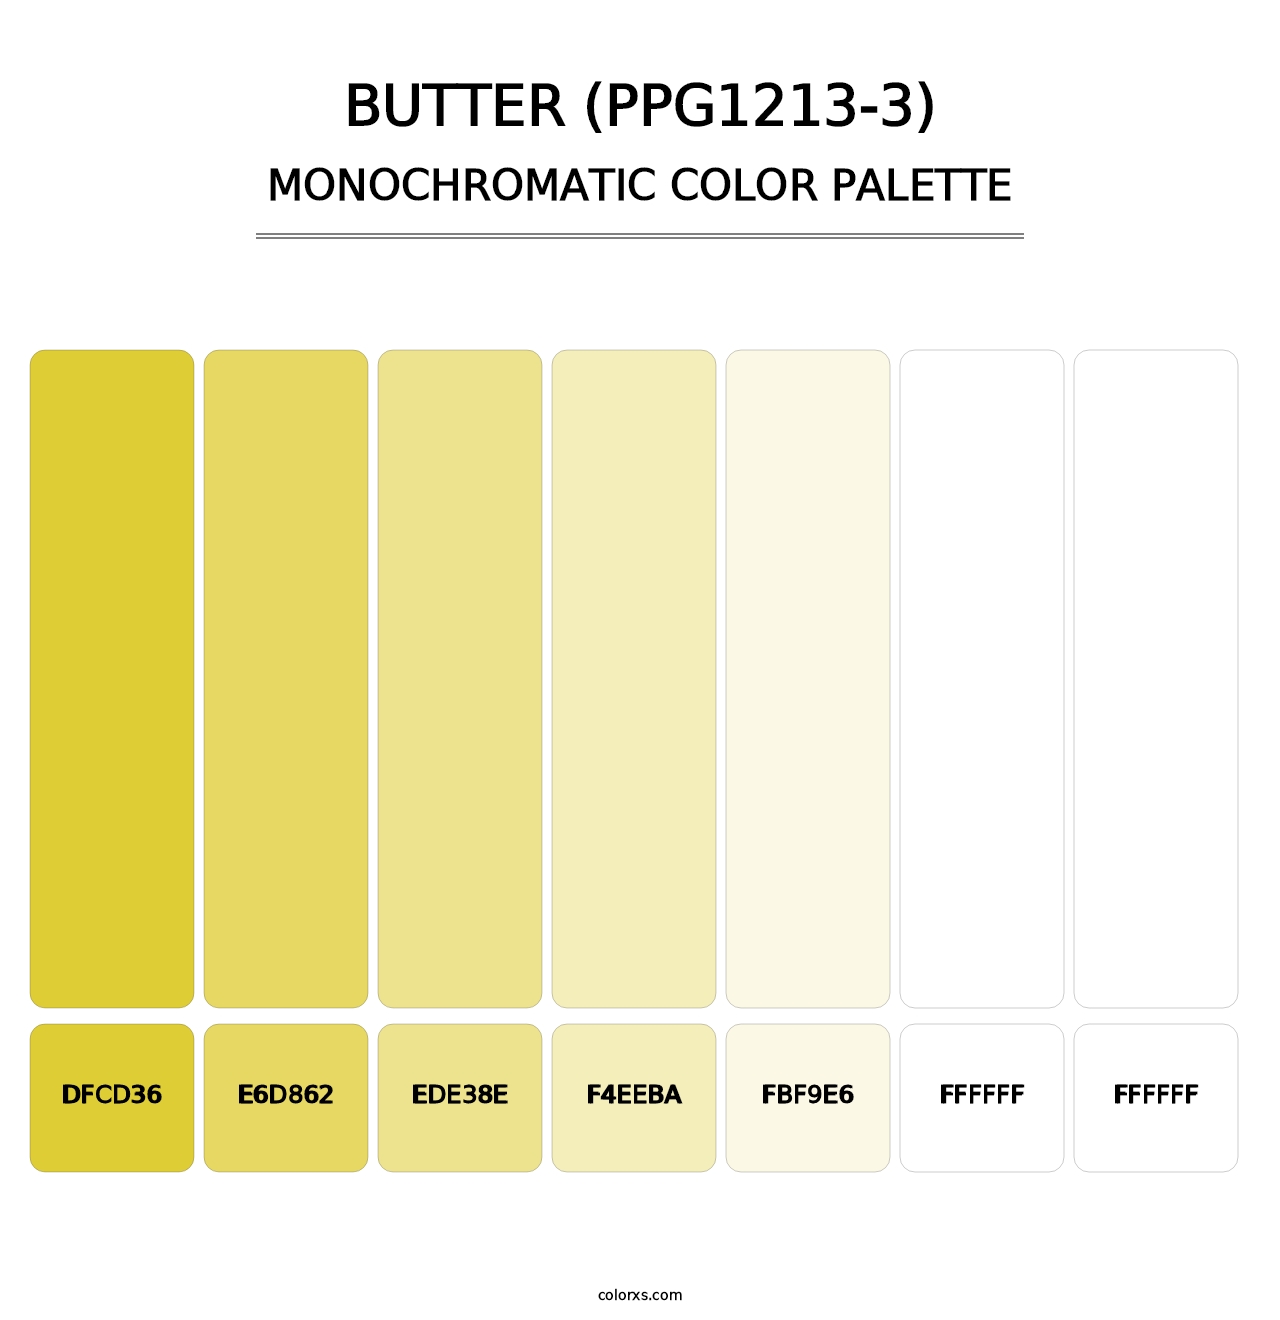 Butter (PPG1213-3) - Monochromatic Color Palette